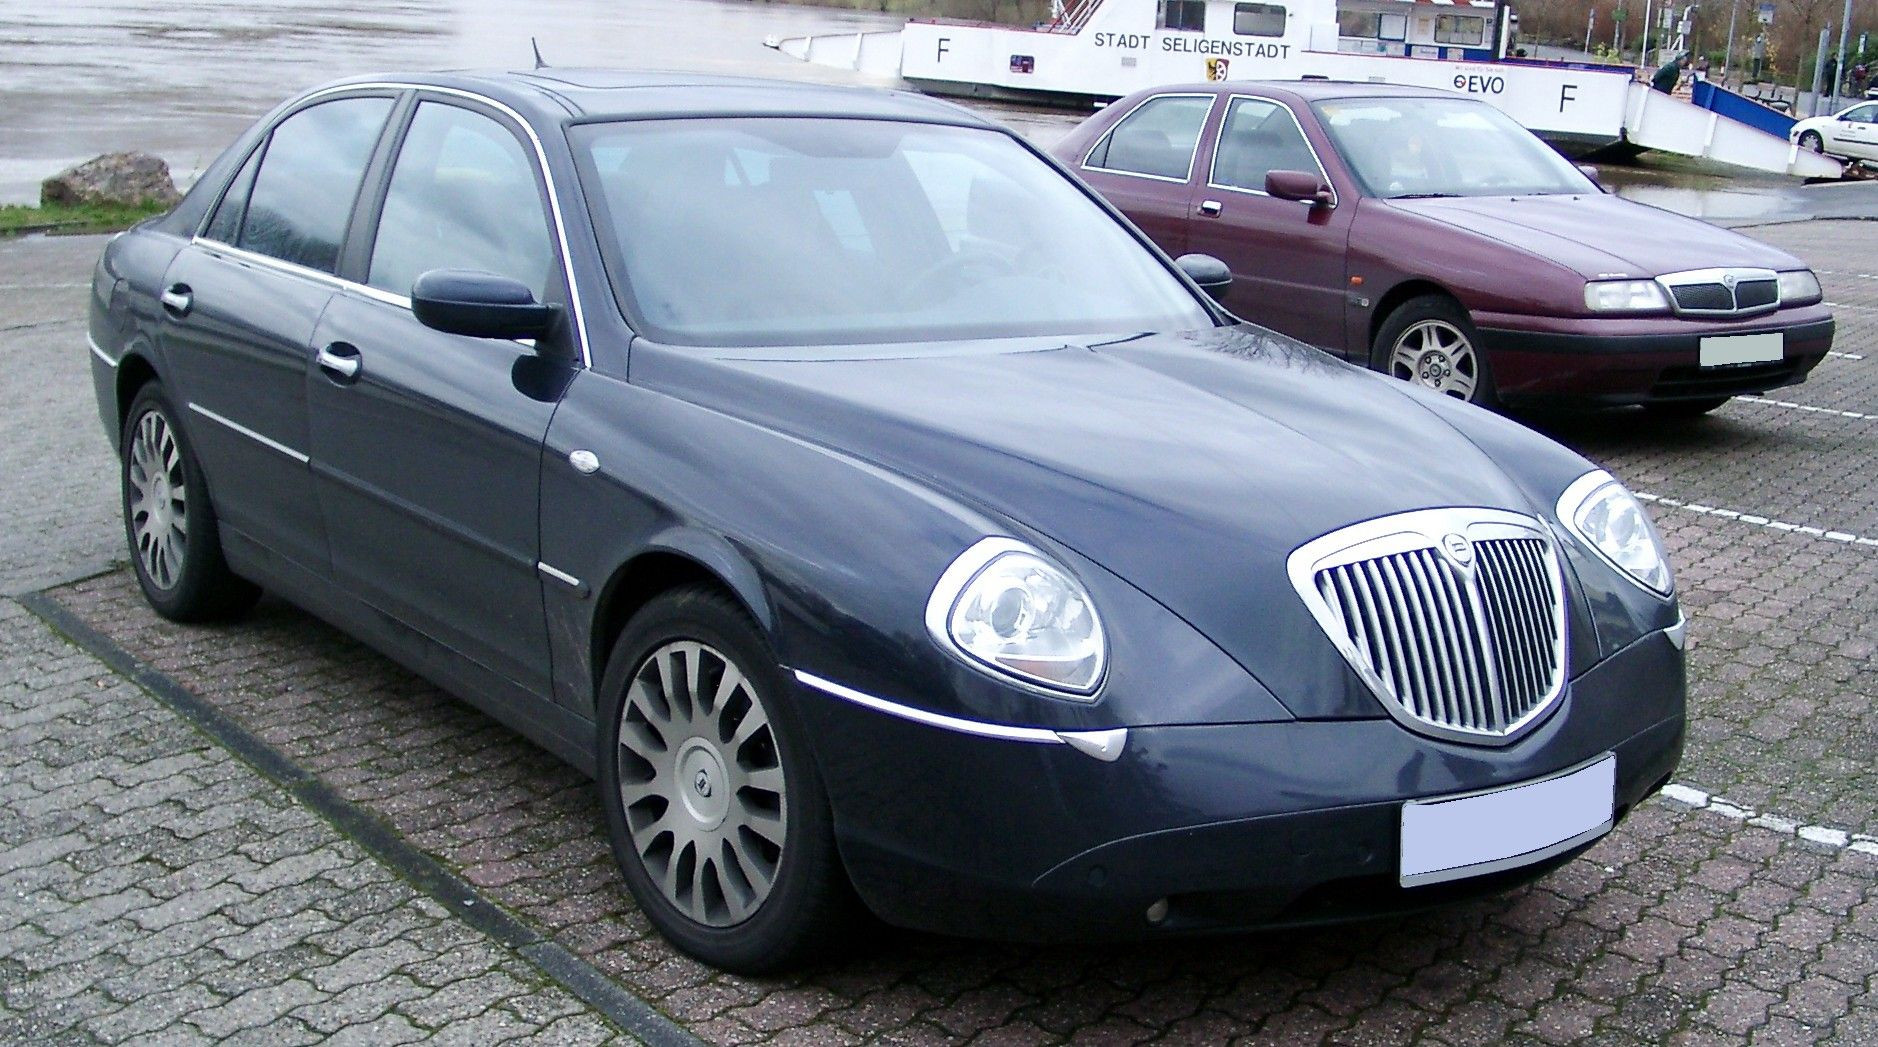 Lancia Thesis at a parking